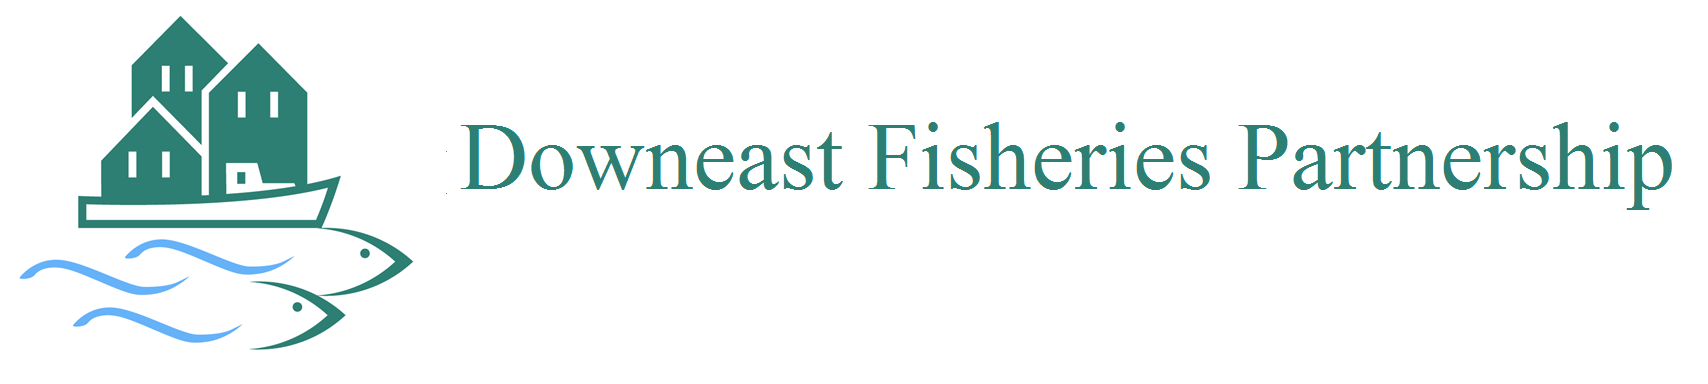 Downeast Fisheries Partnership logo